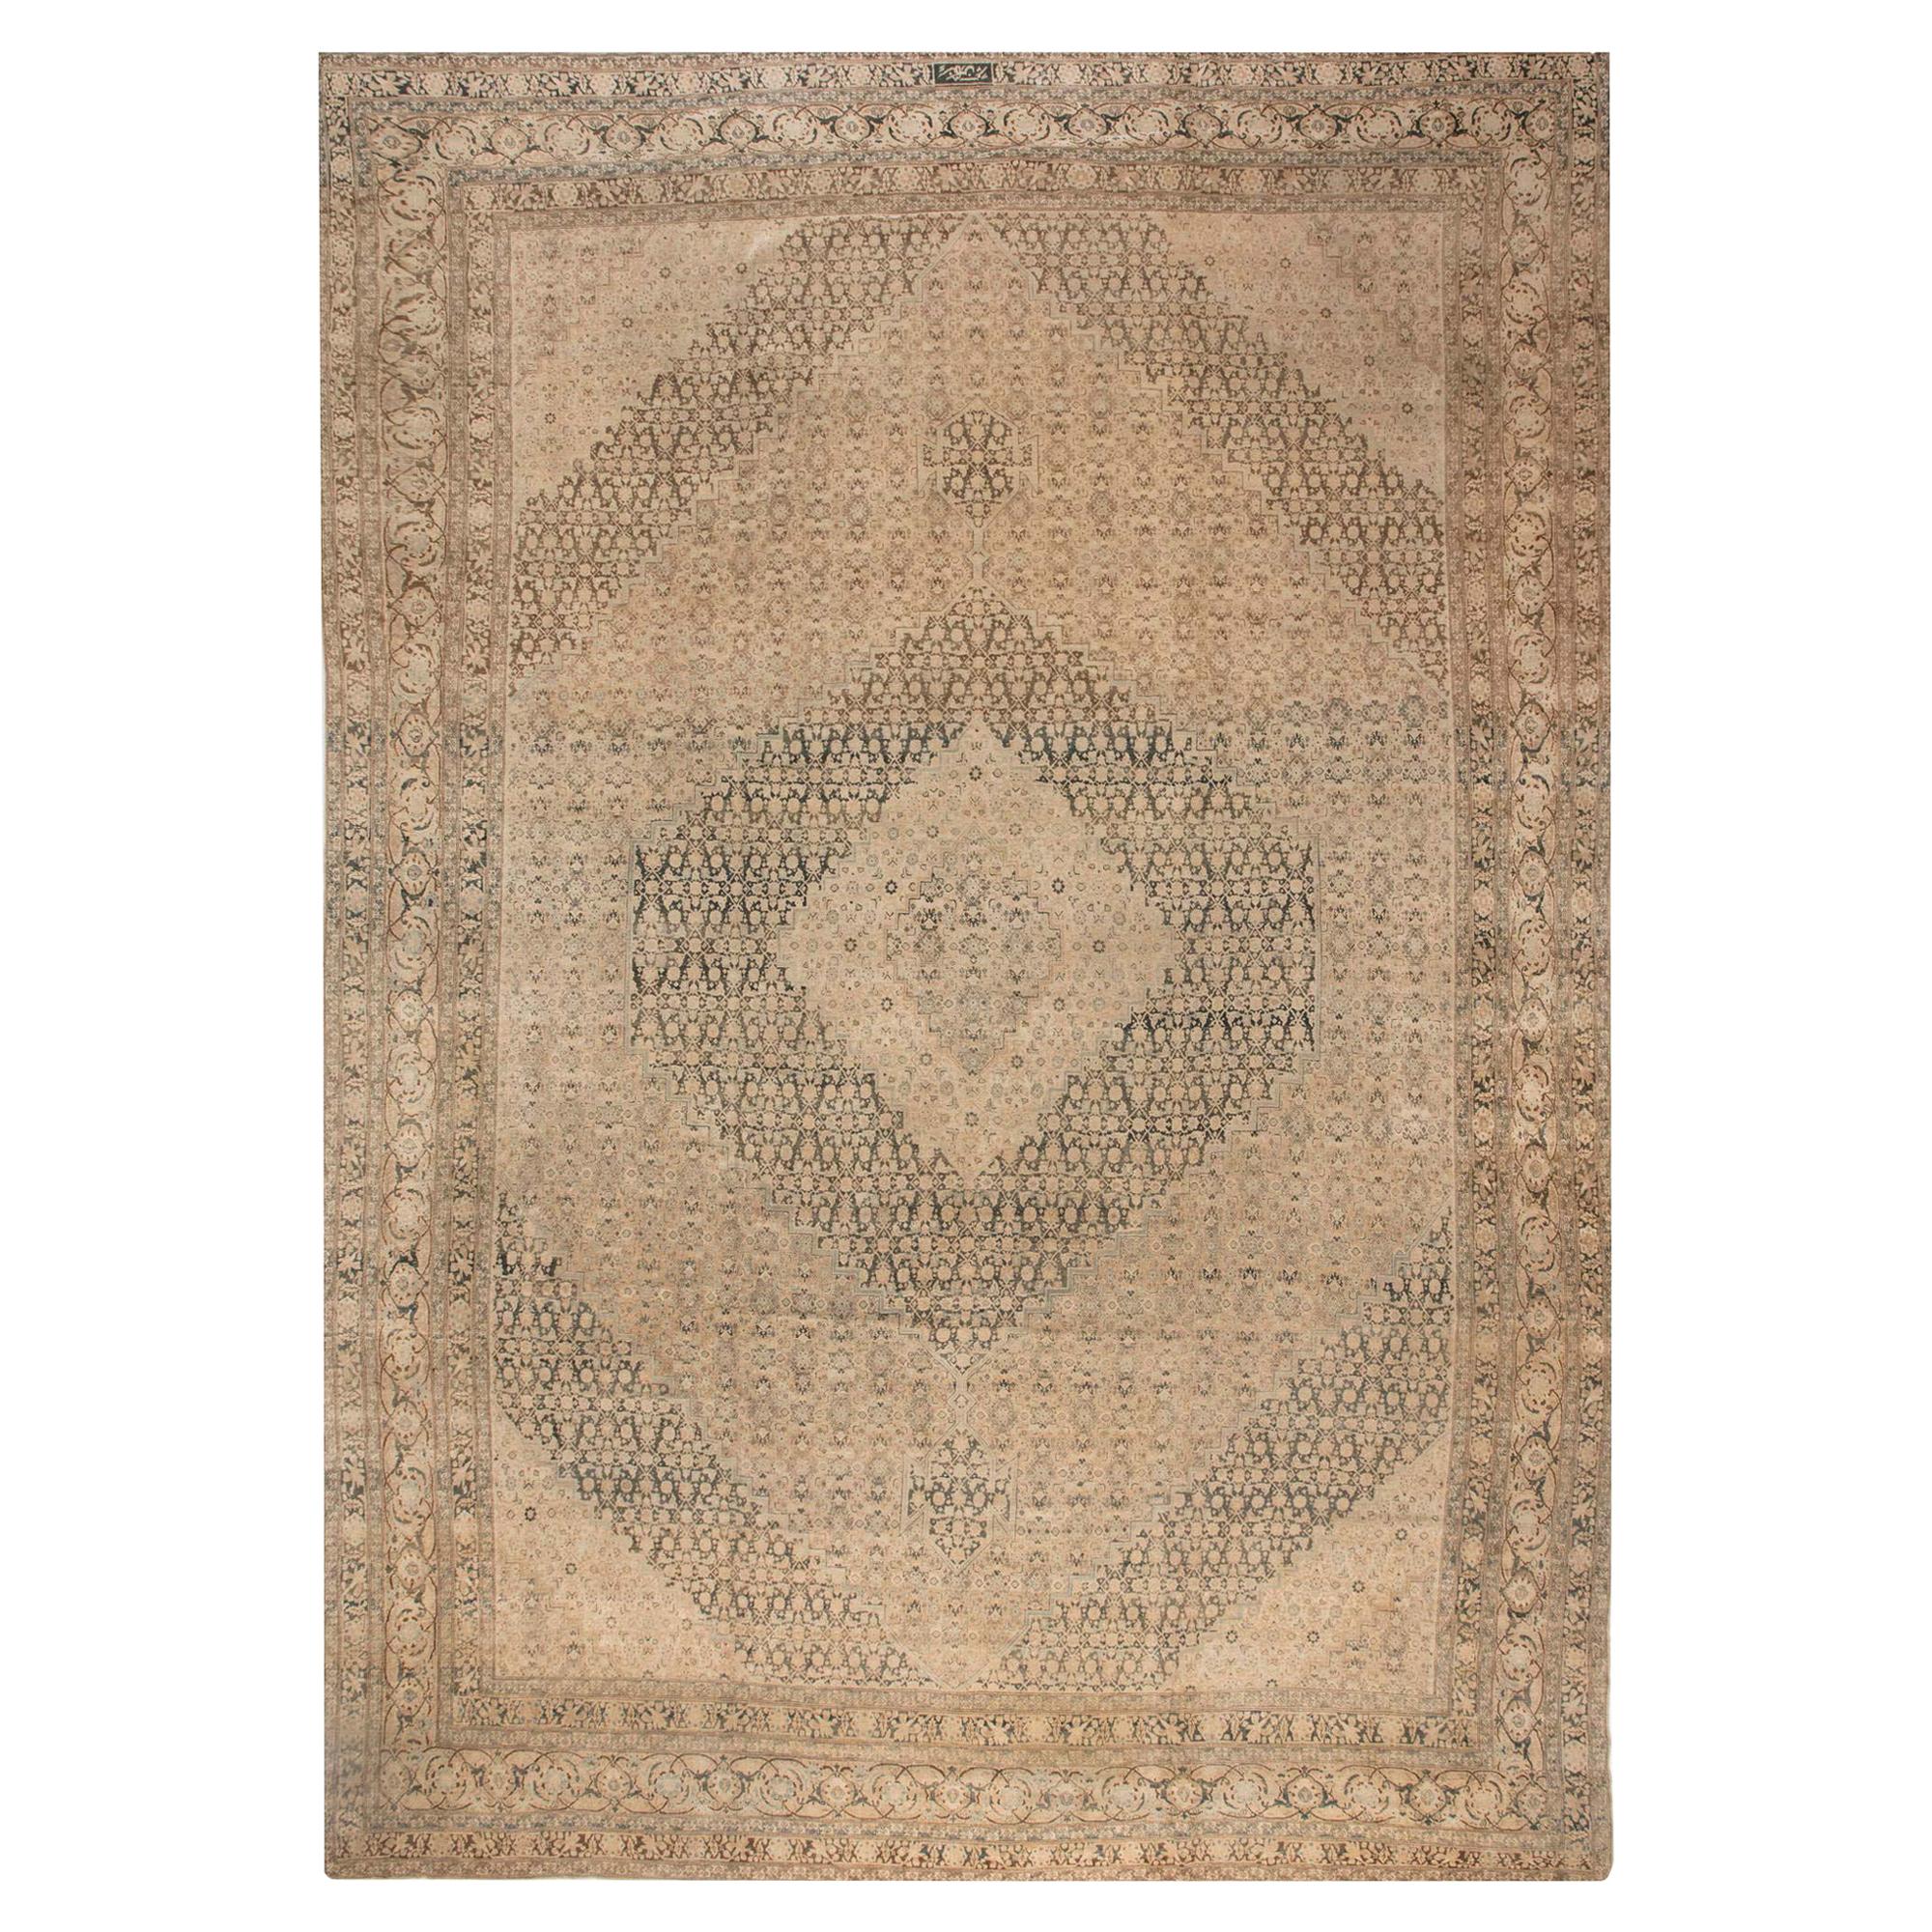 Antique Persian Tabriz Handwoven Wool Carpet For Sale